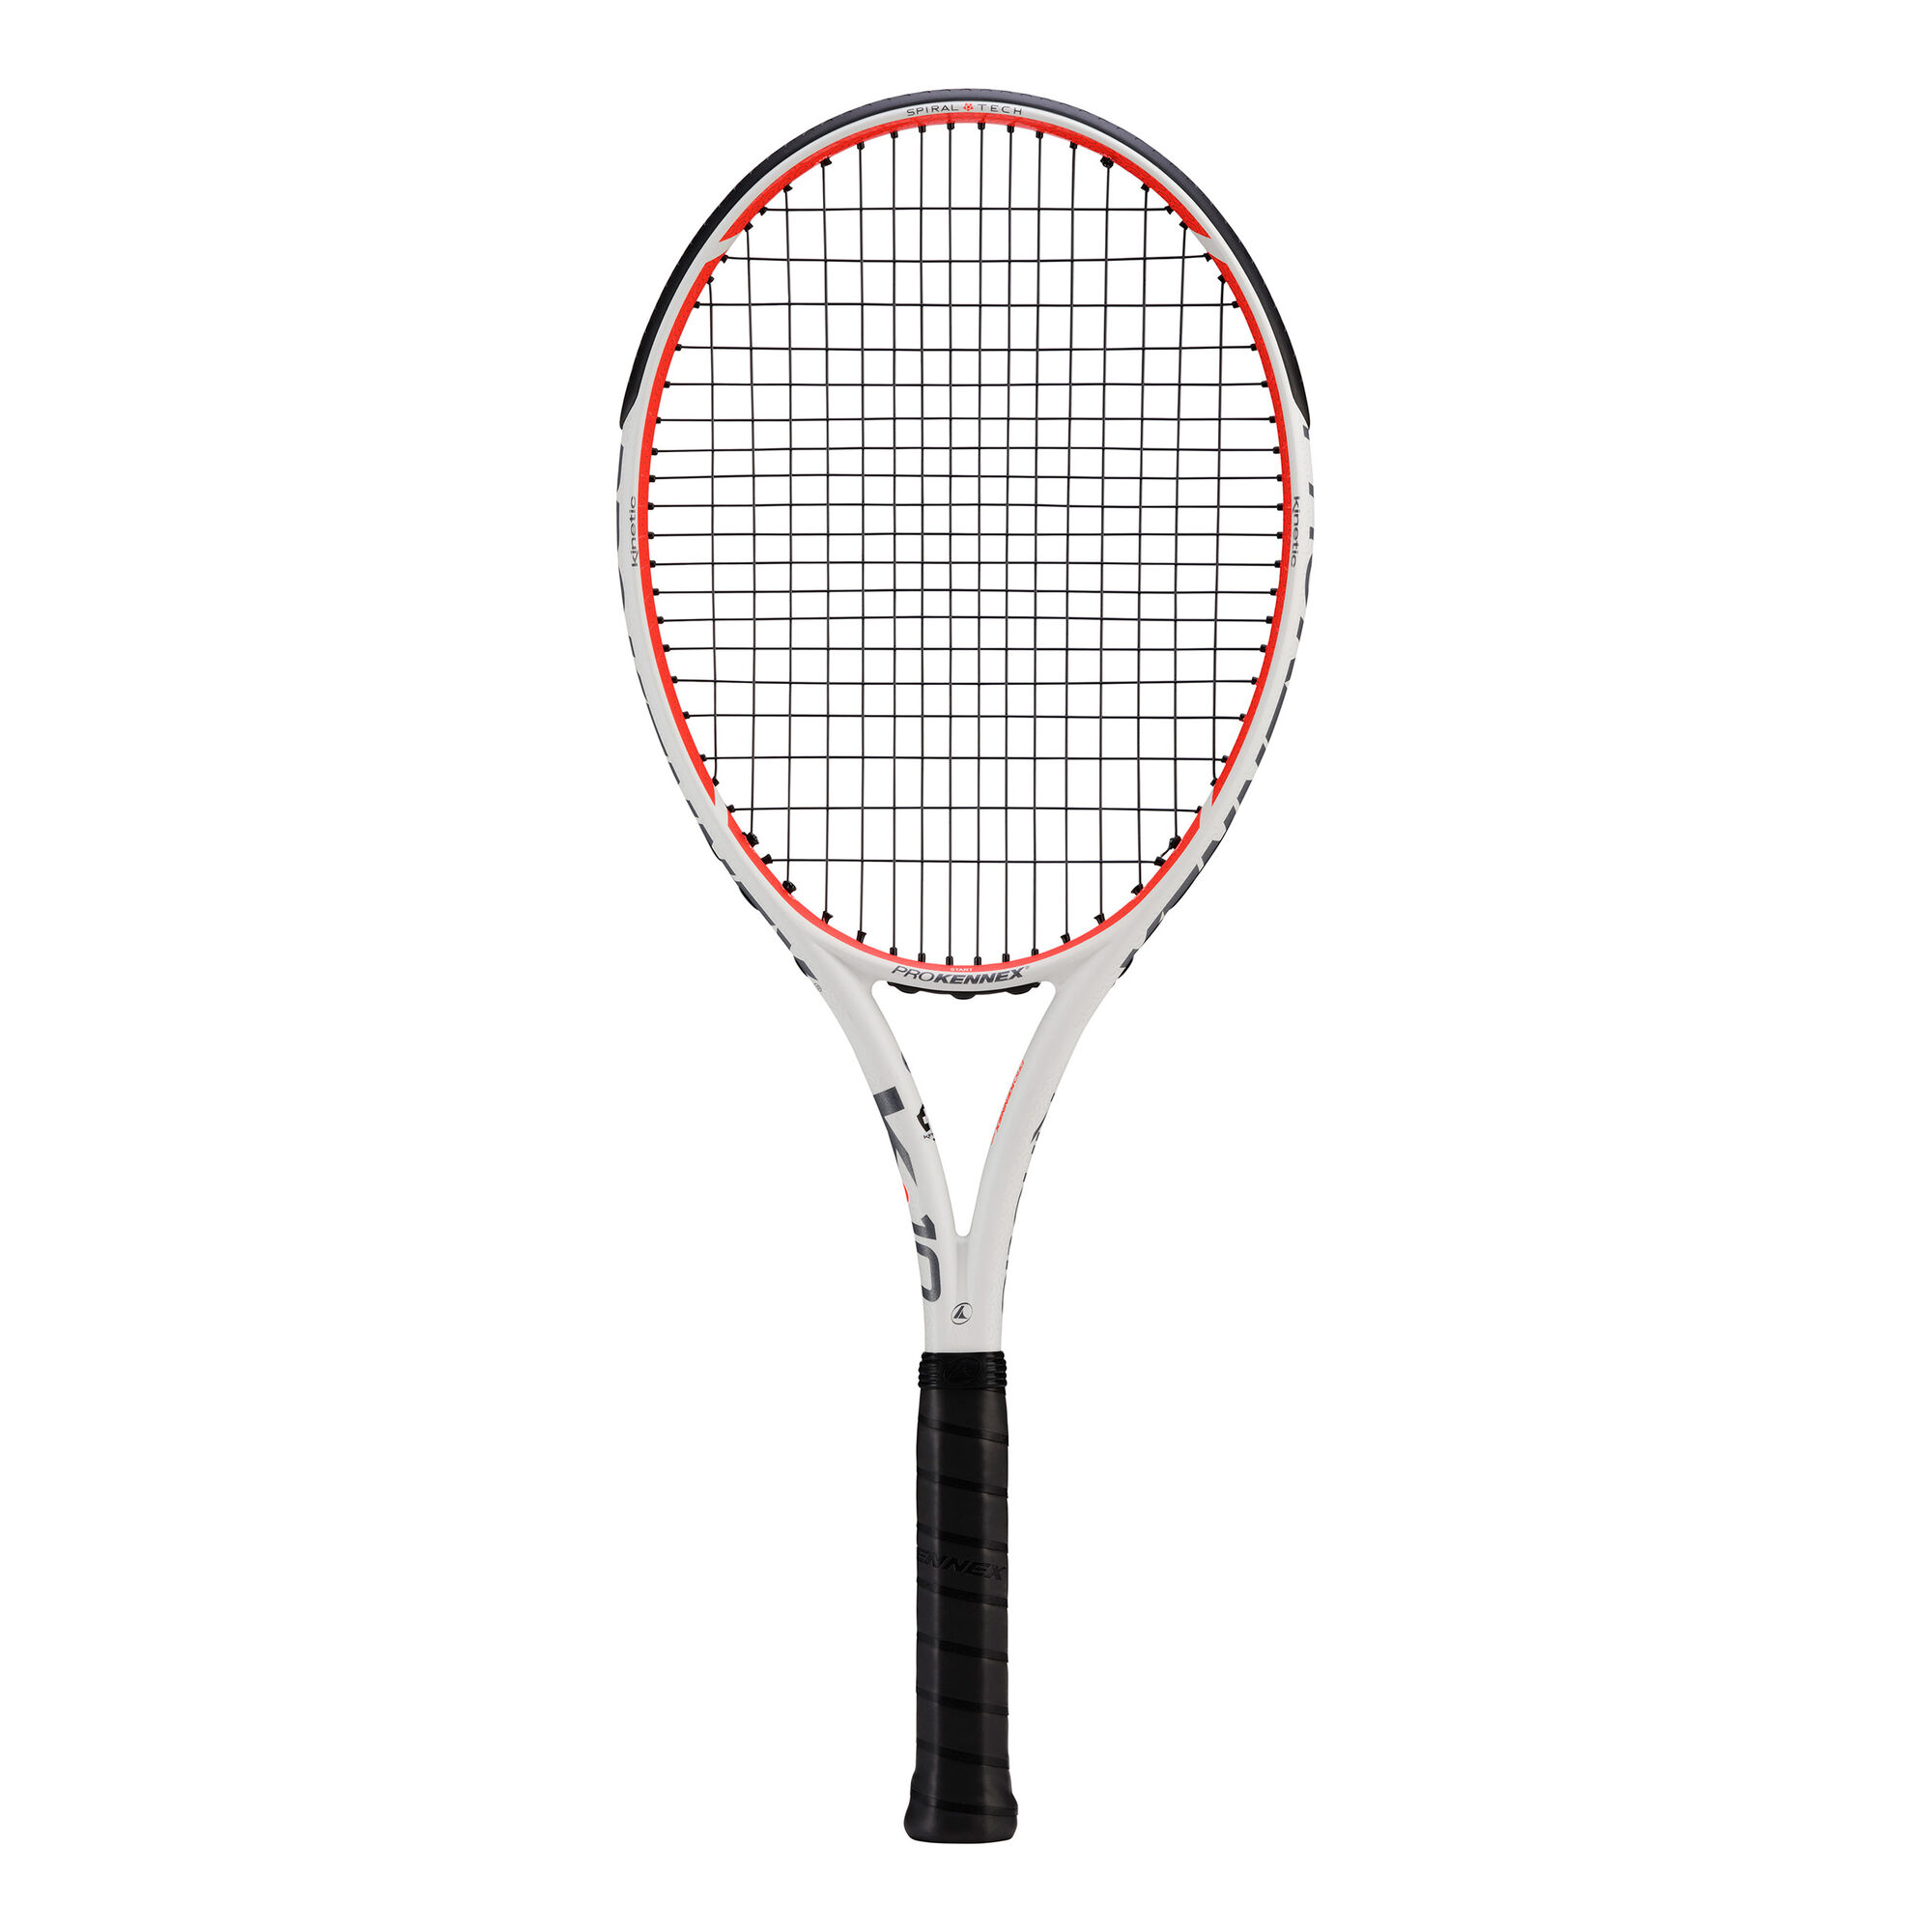 Tennis Buy Kinetic online Point 10 PROKENNEX (305g) | COM